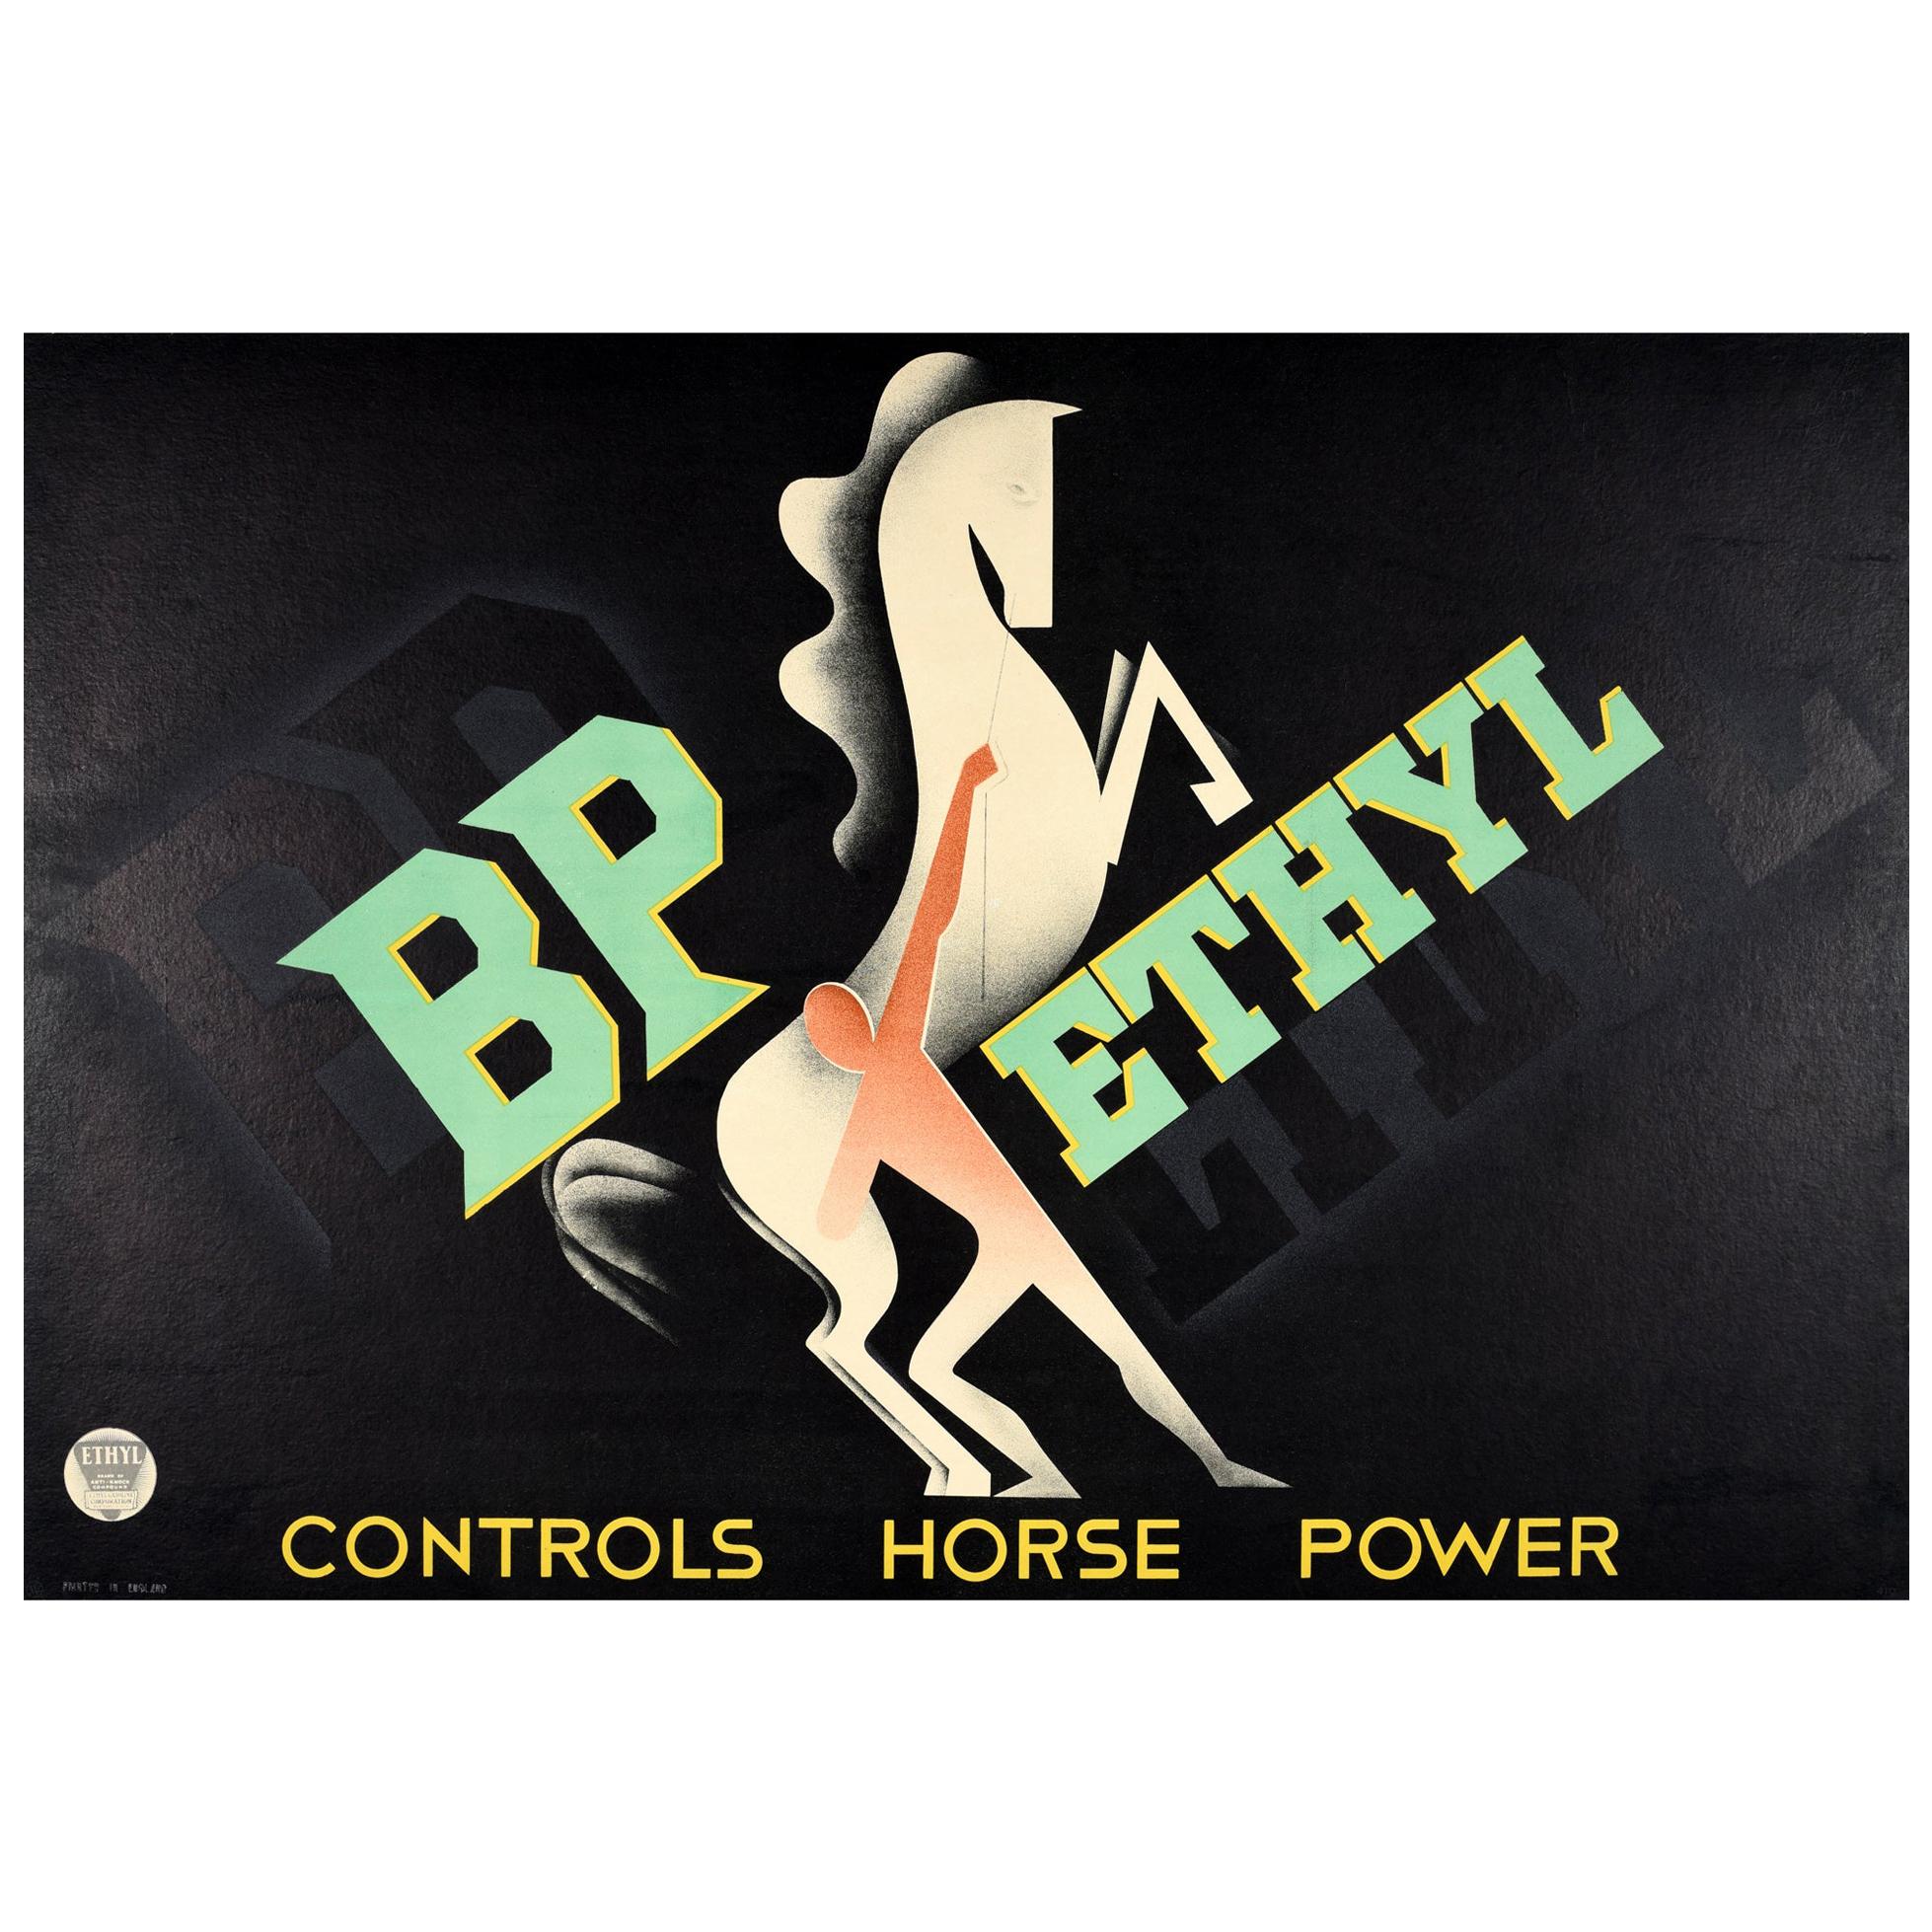 Original Vintage Poster BP Ethyl Controls Horse Power Modernist Art Deco Design For Sale